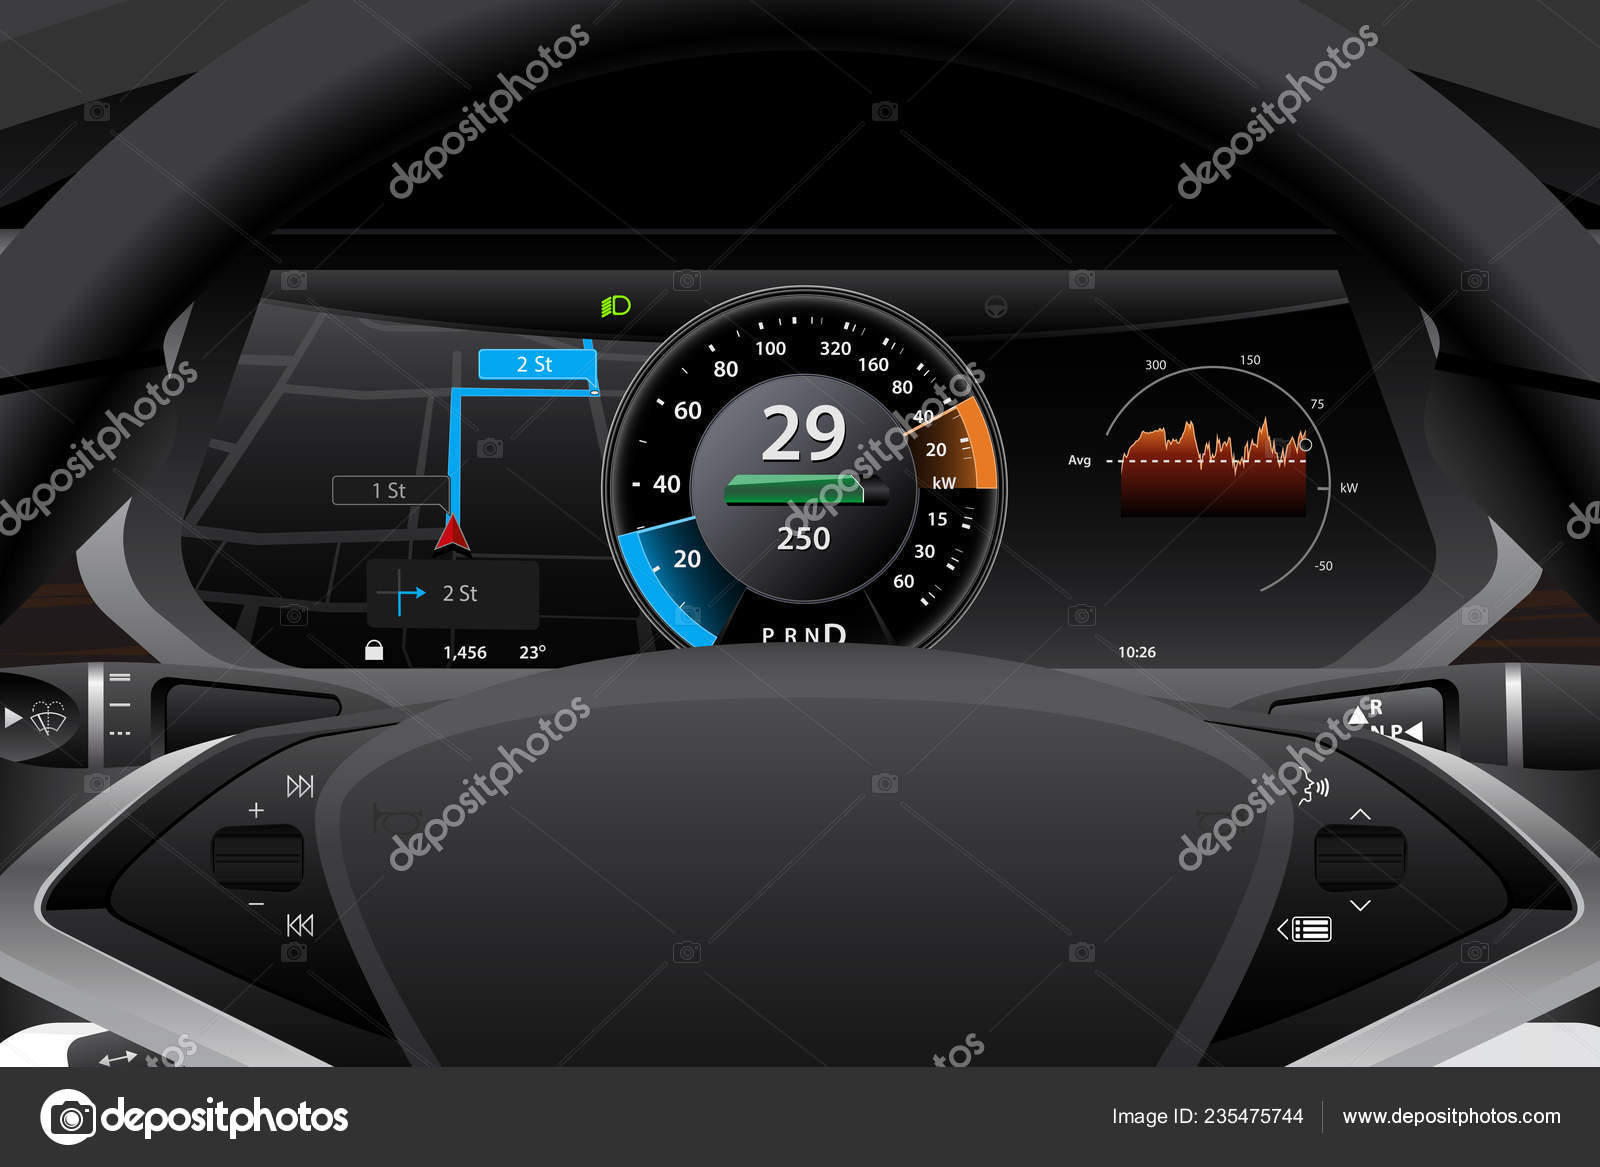 https://st4.depositphotos.com/6838070/23547/v/1600/depositphotos_235475744-stock-illustration-electric-car-dashboard-display-closeup.jpg